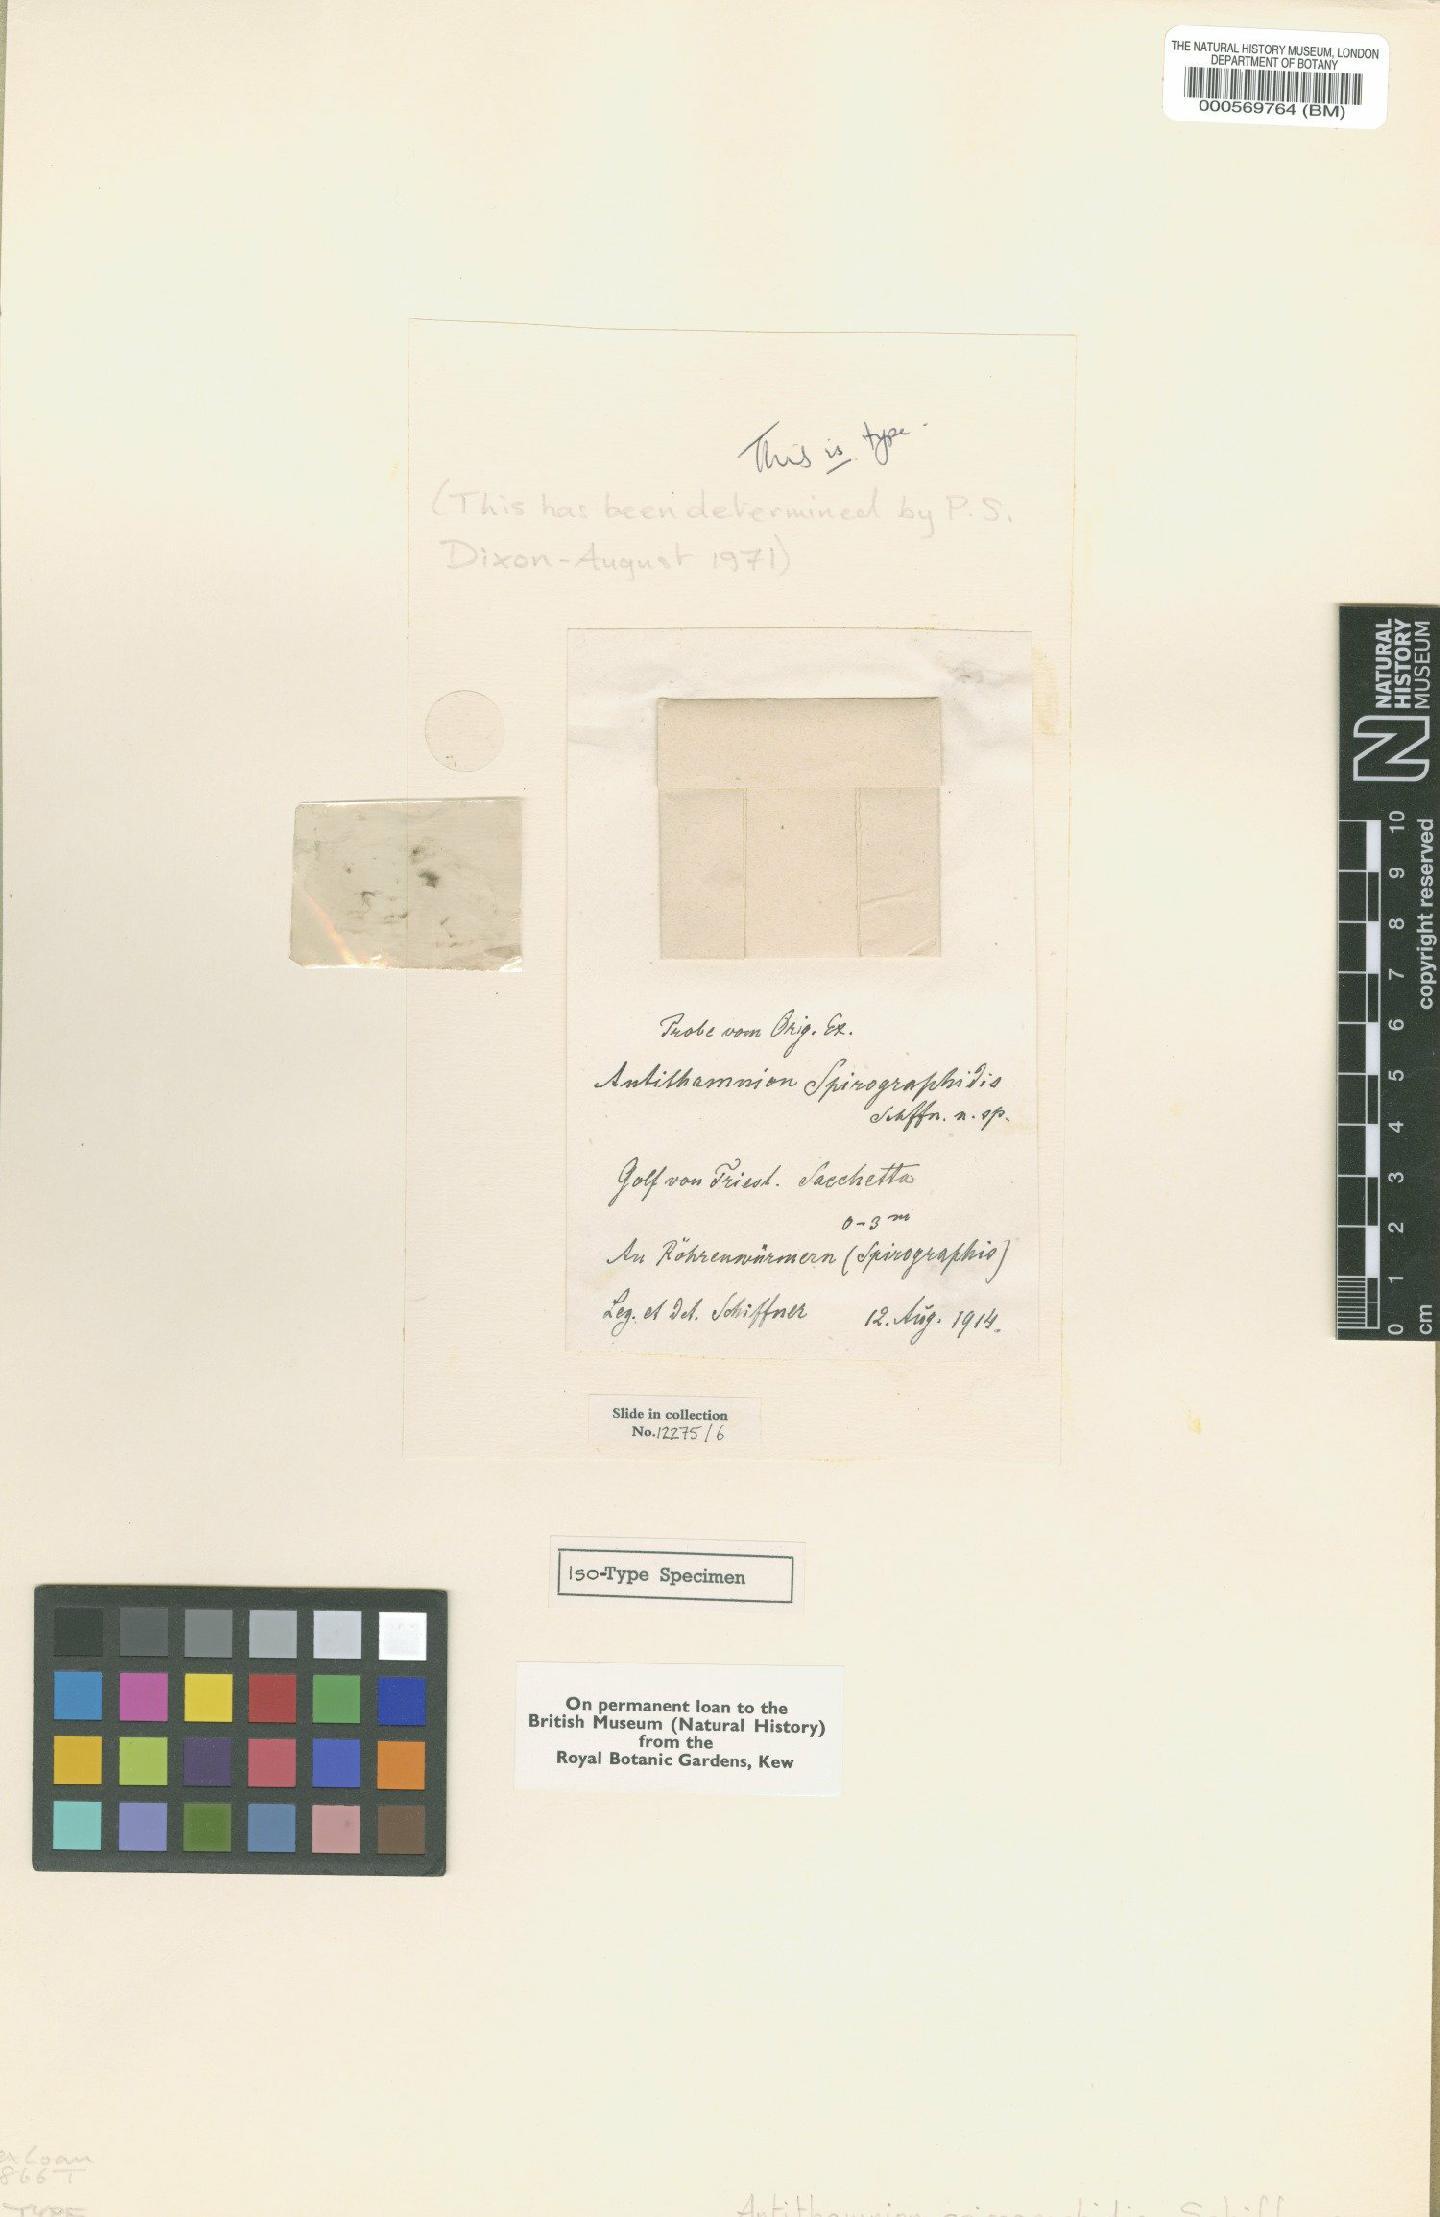 To NHMUK collection (Antithamnion spirographidis Schiffn.; Isotype; NHMUK:ecatalogue:4788011)